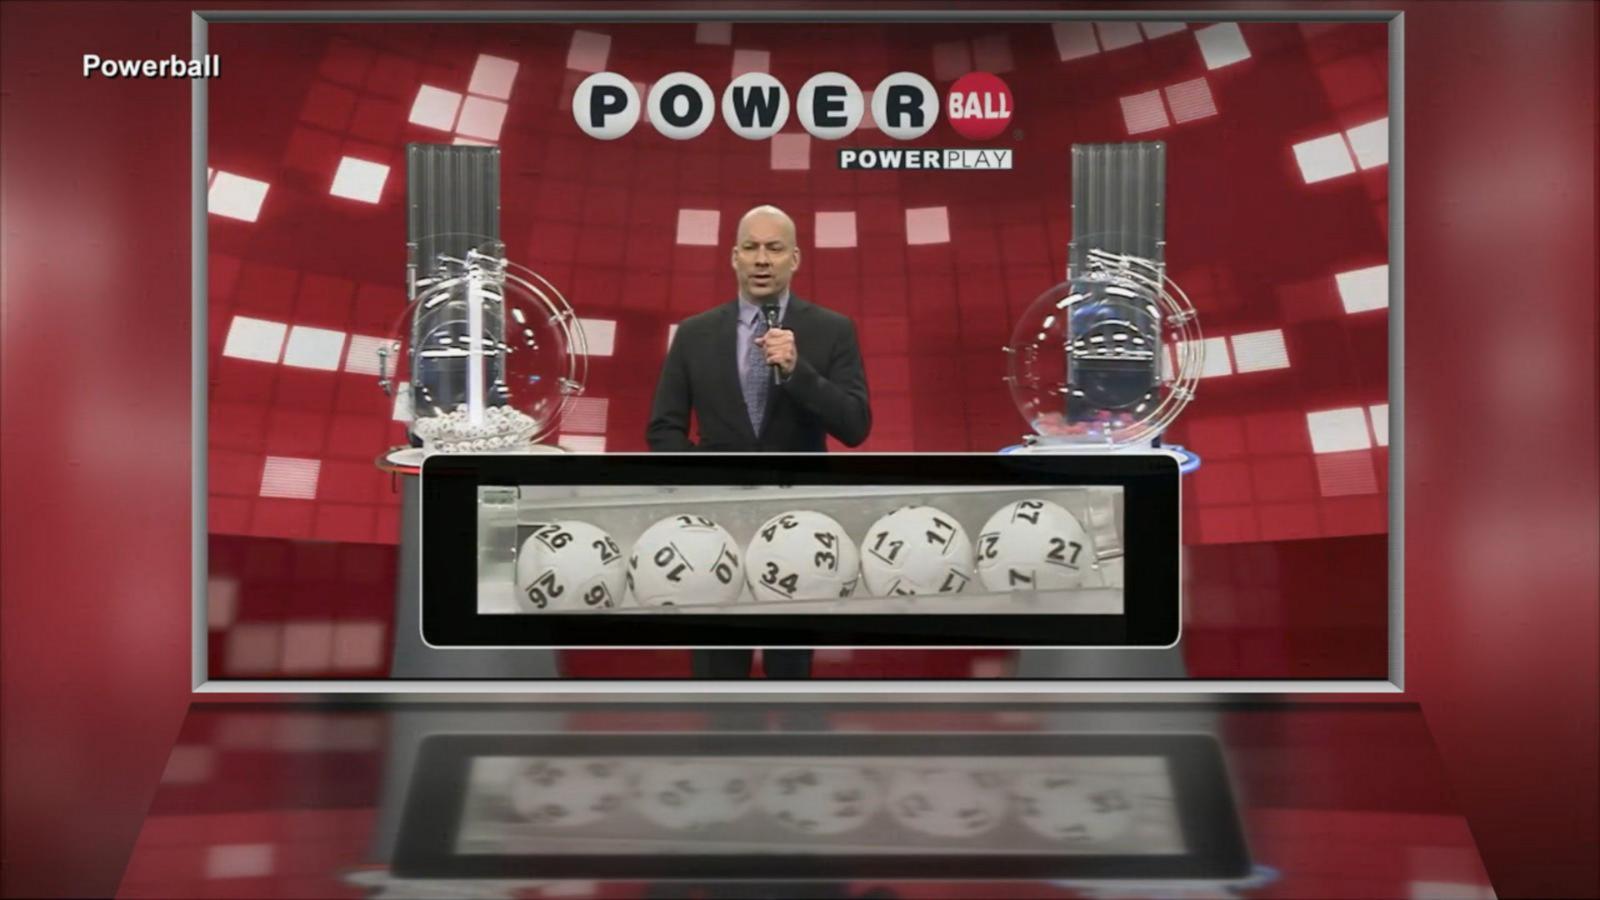 VIDEO: No winner drawn for Powerball jackpot